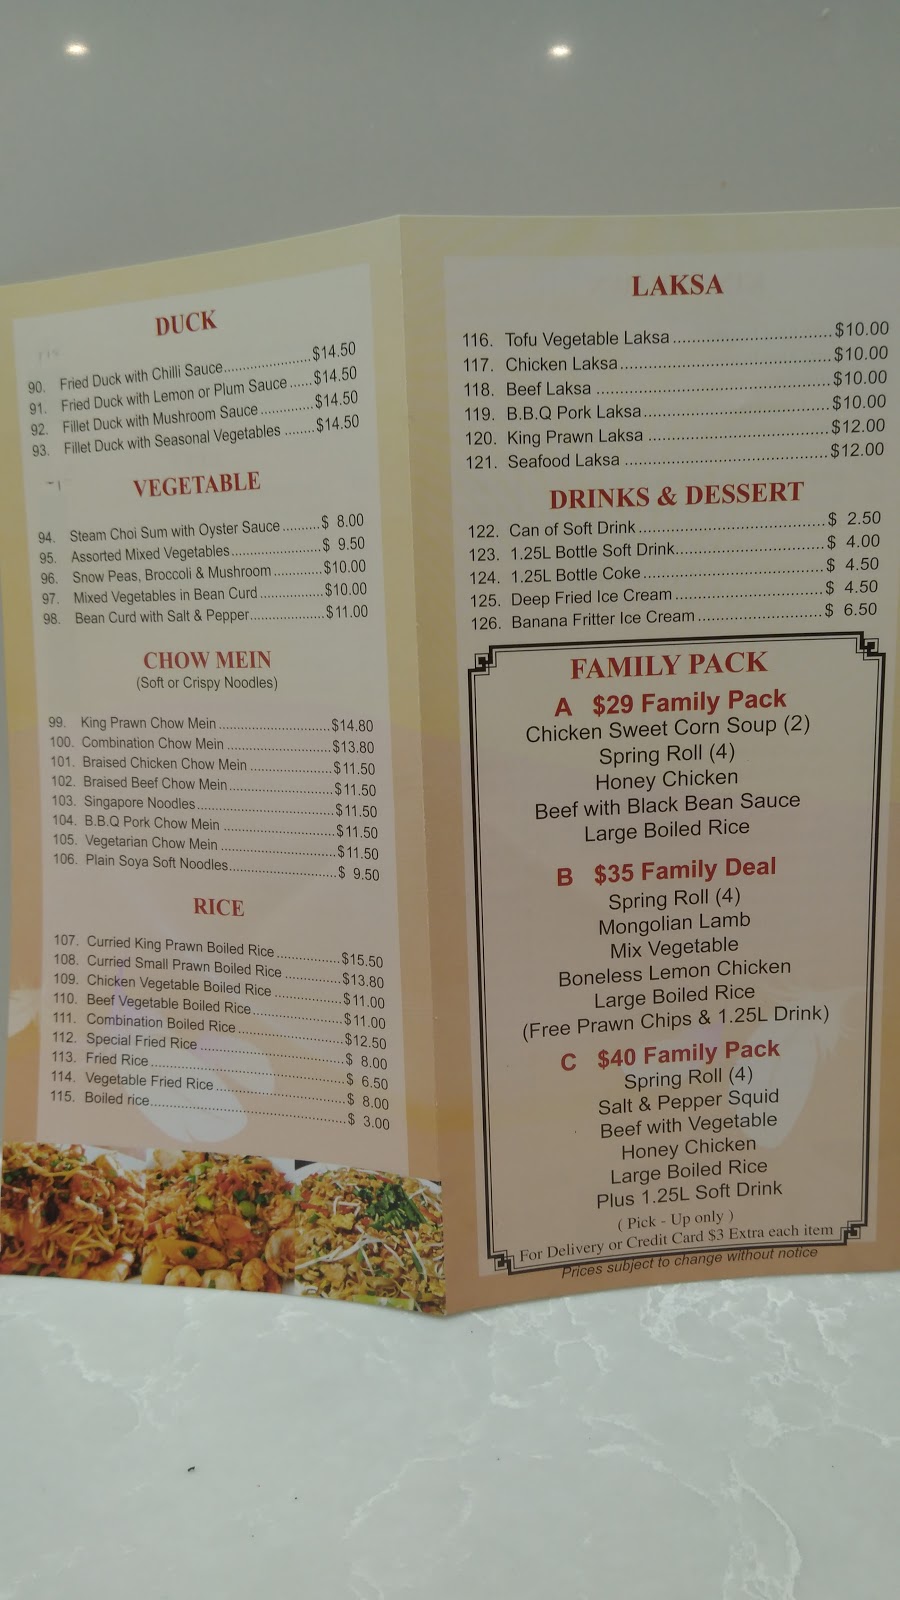 Sun Tat Chinese Restaurant | 480 Liverpool Rd, Strathfield South NSW 2135, Australia | Phone: (02) 9642 5272